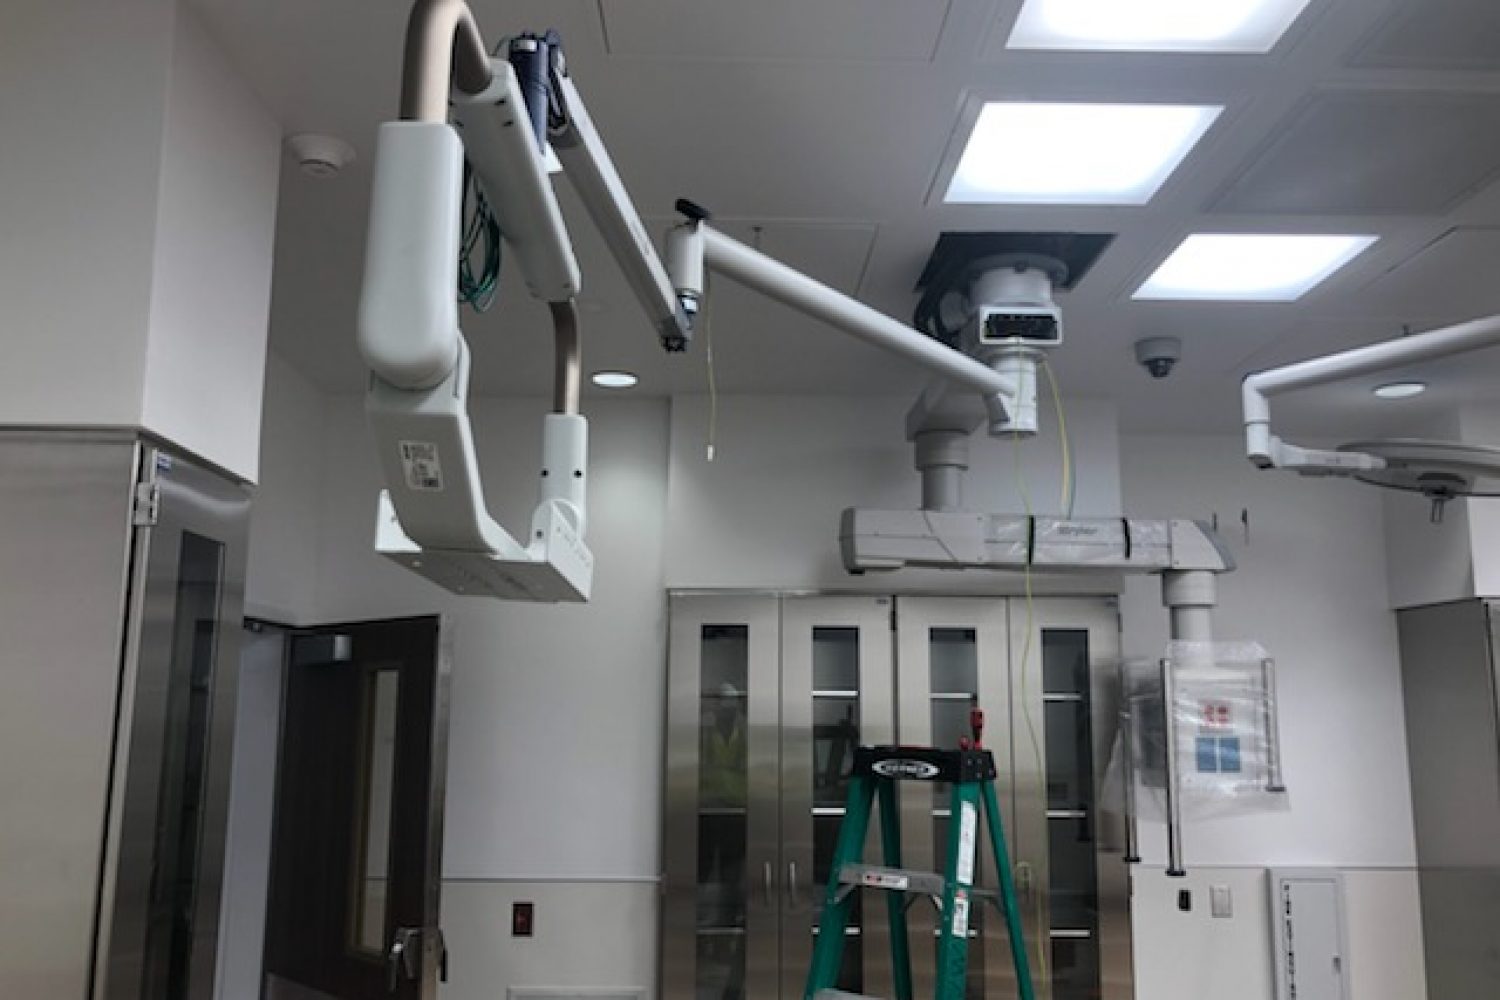 Stryker Boom and Light Installation at Piedmont Hospital